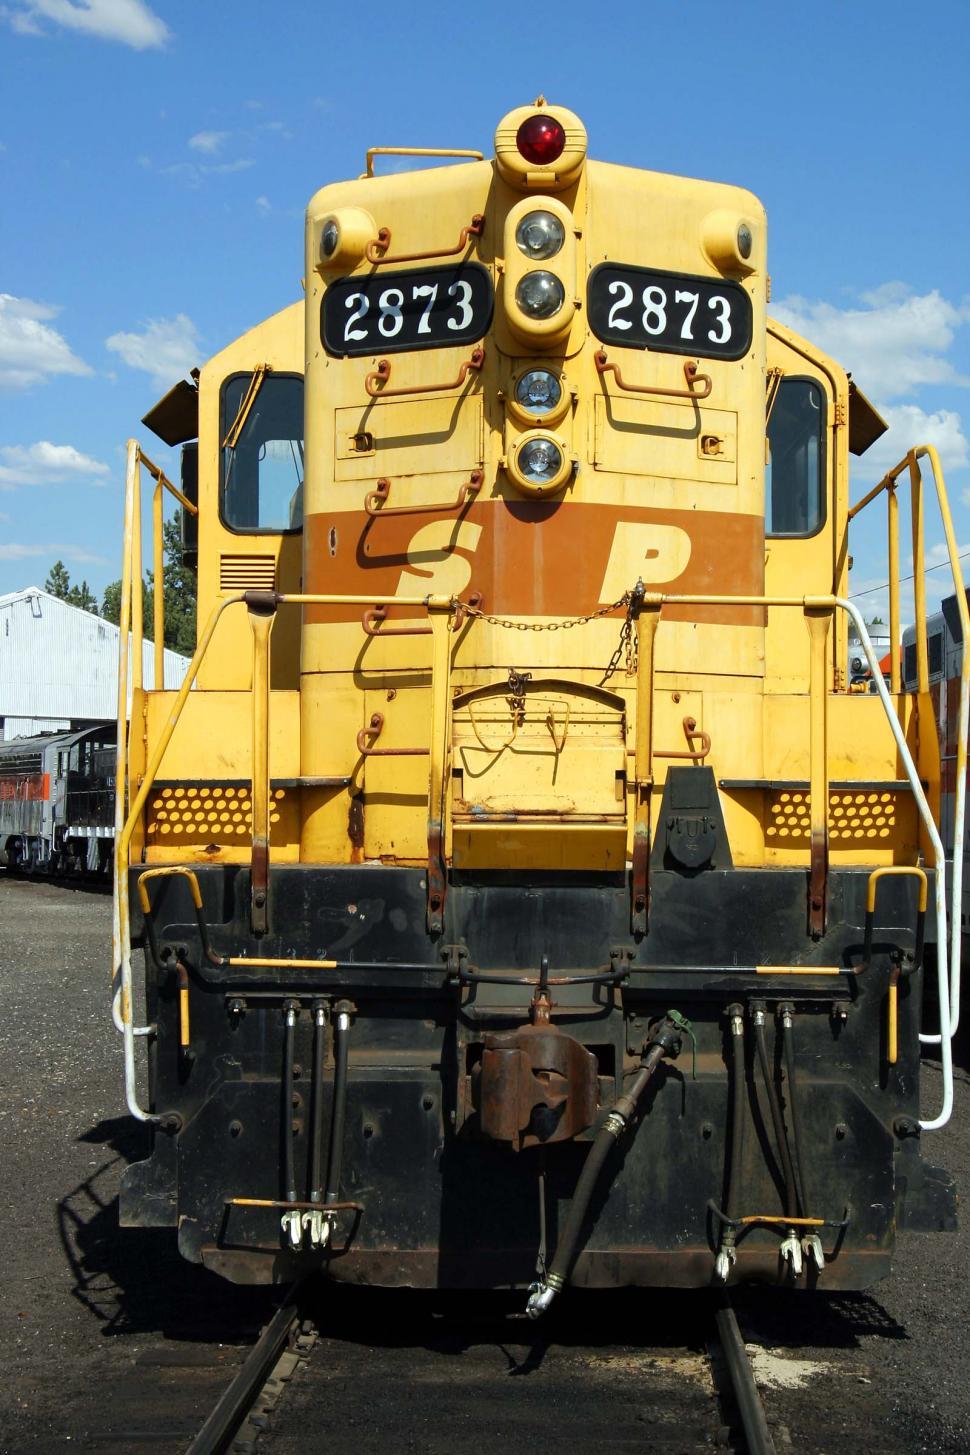 Free Image of train california locomotive decommission machine cab engine 2873 railroad headlight 